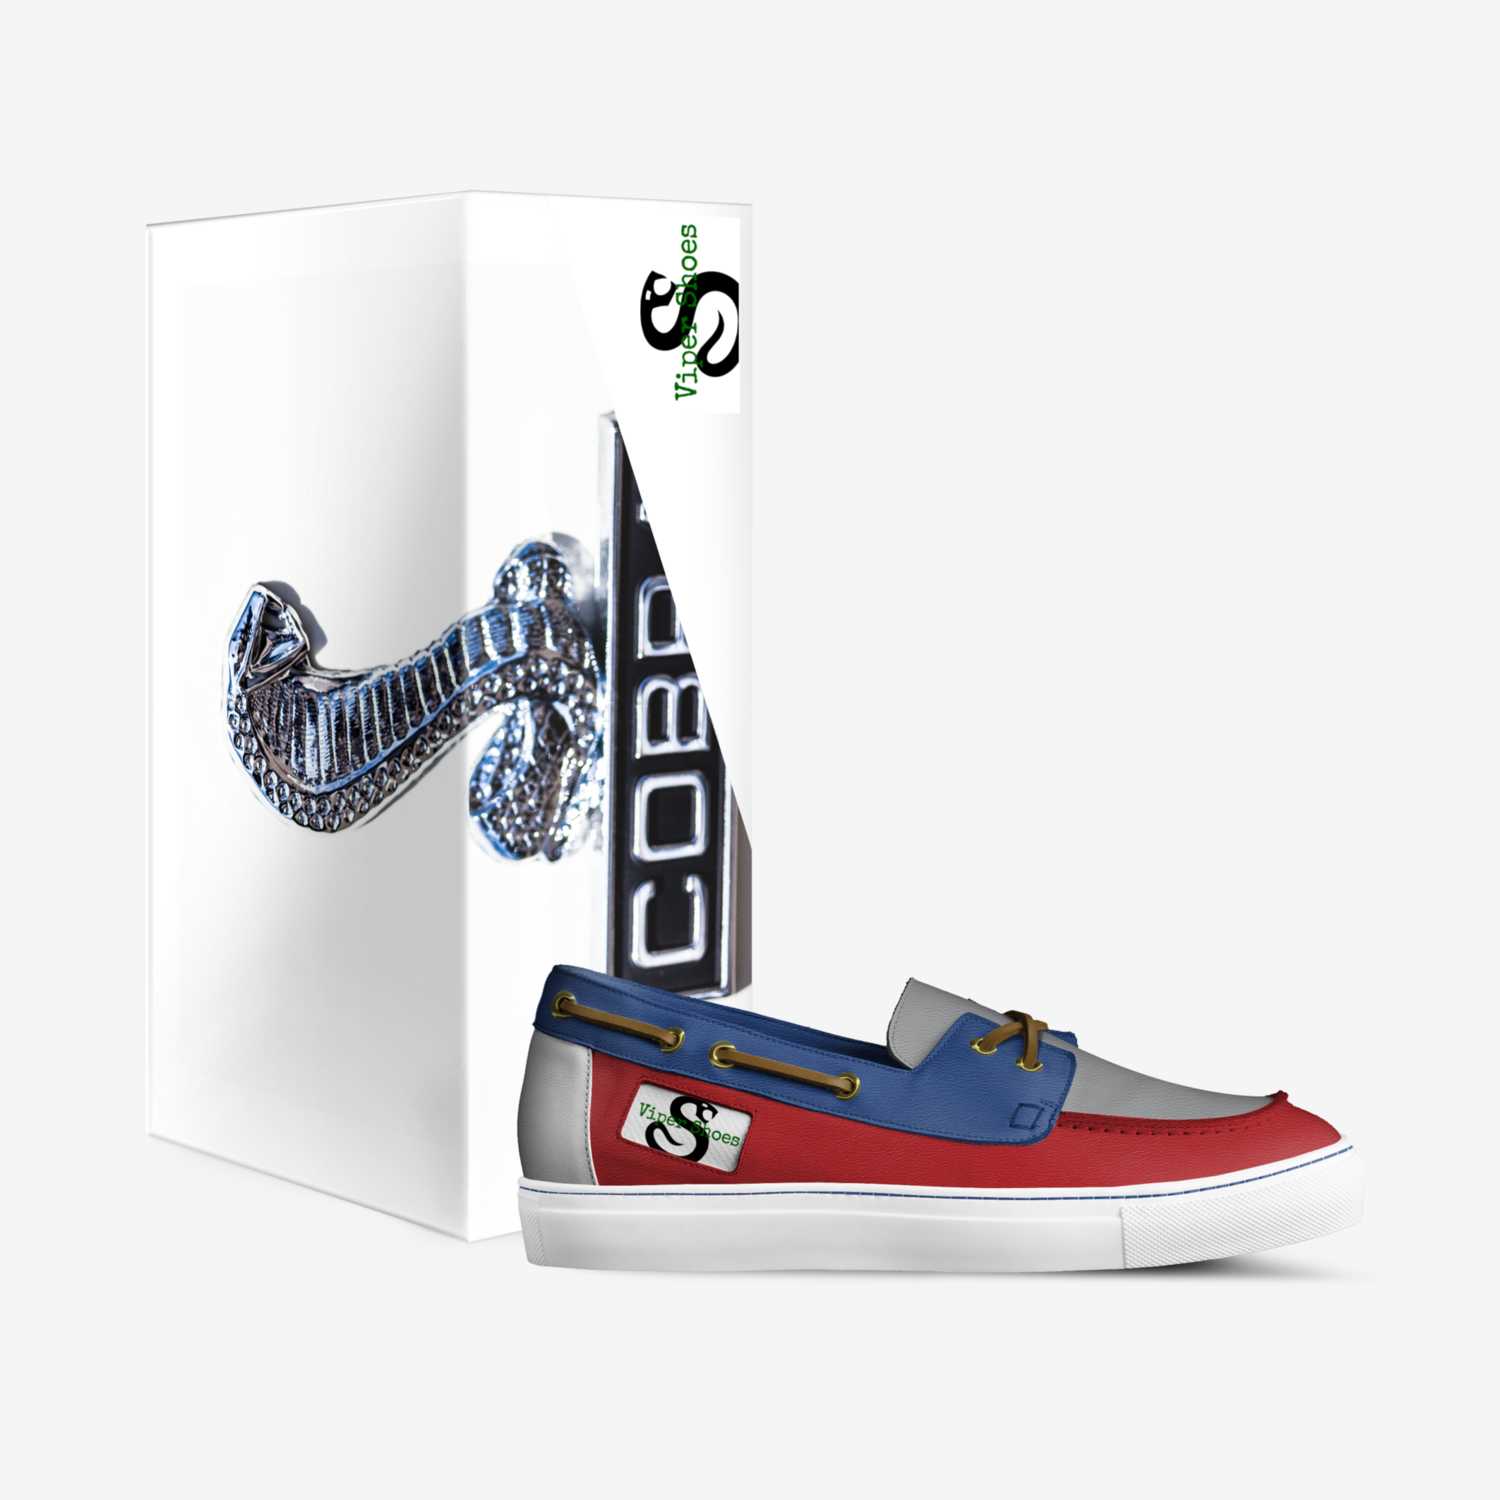 Shark Shoes  A Custom Shoe concept by Kevin Barnard